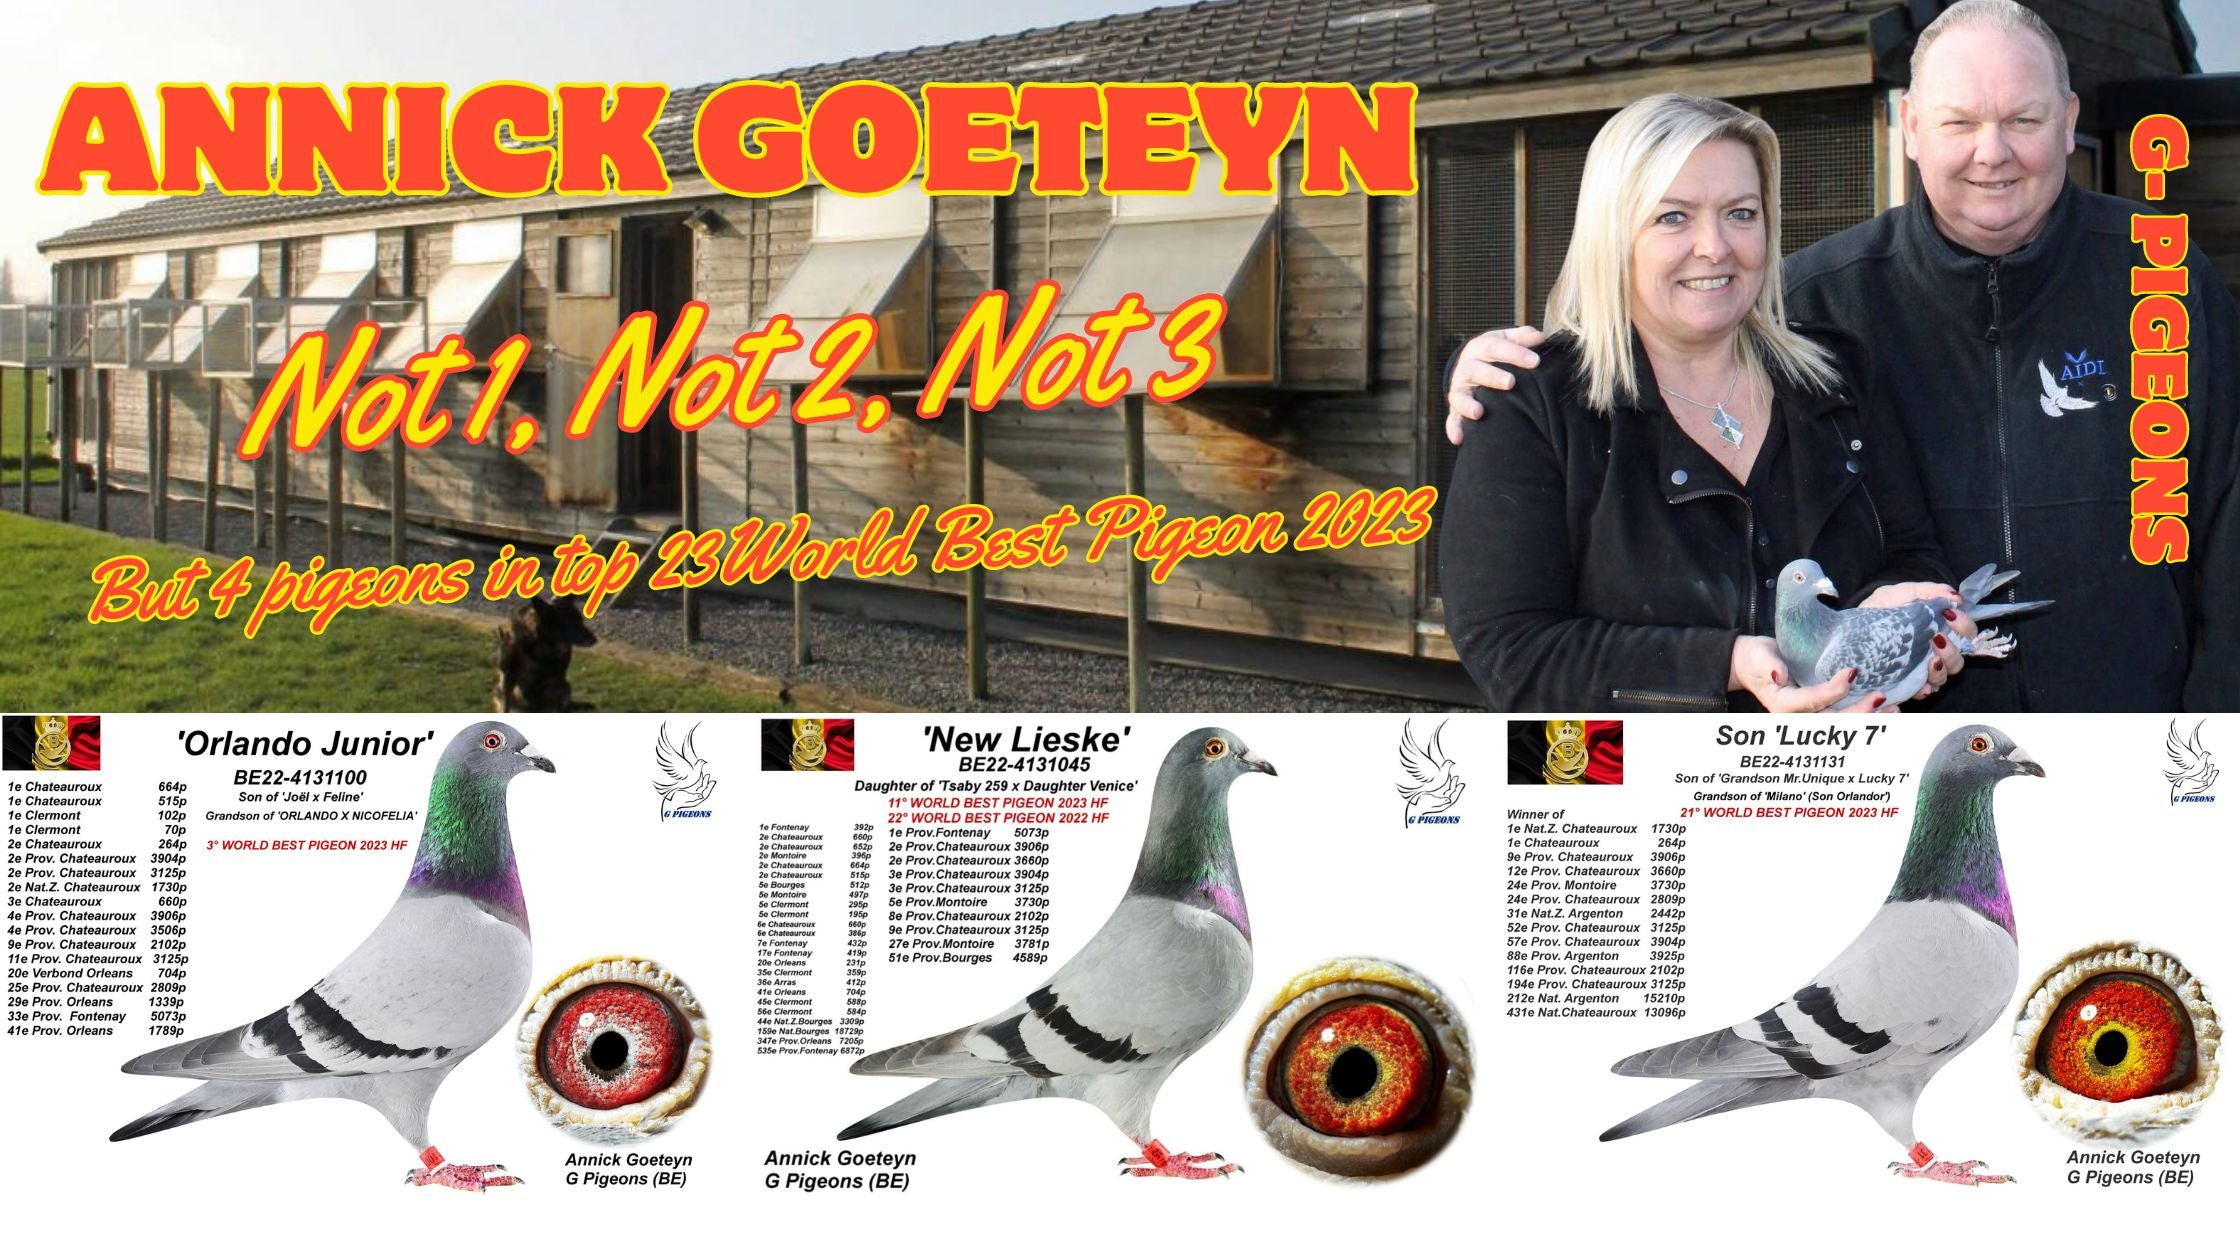 Annick Goeteyn: The Superstar with Vandenabeele Pigeons as the Foundation!